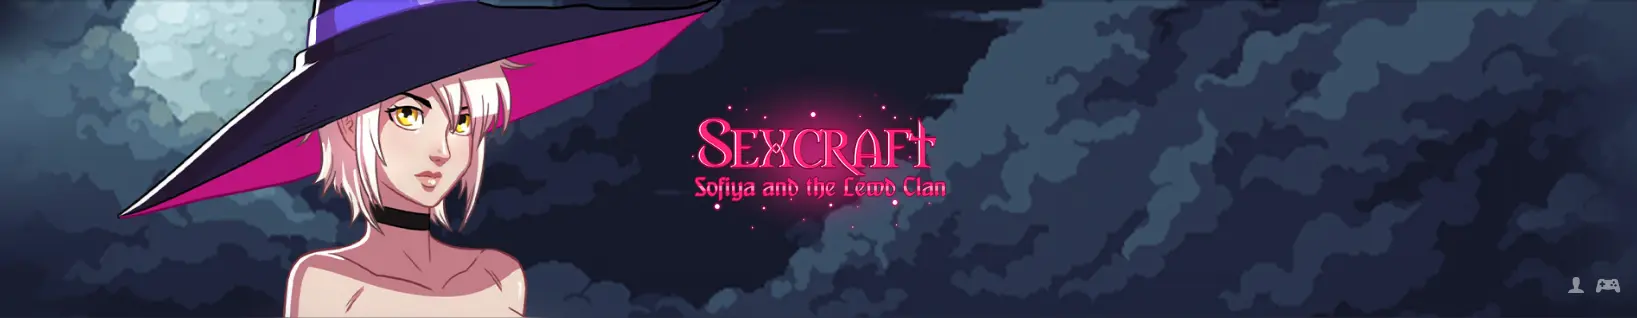 Sexcraft - Sofiya and the Lewd Clan main image